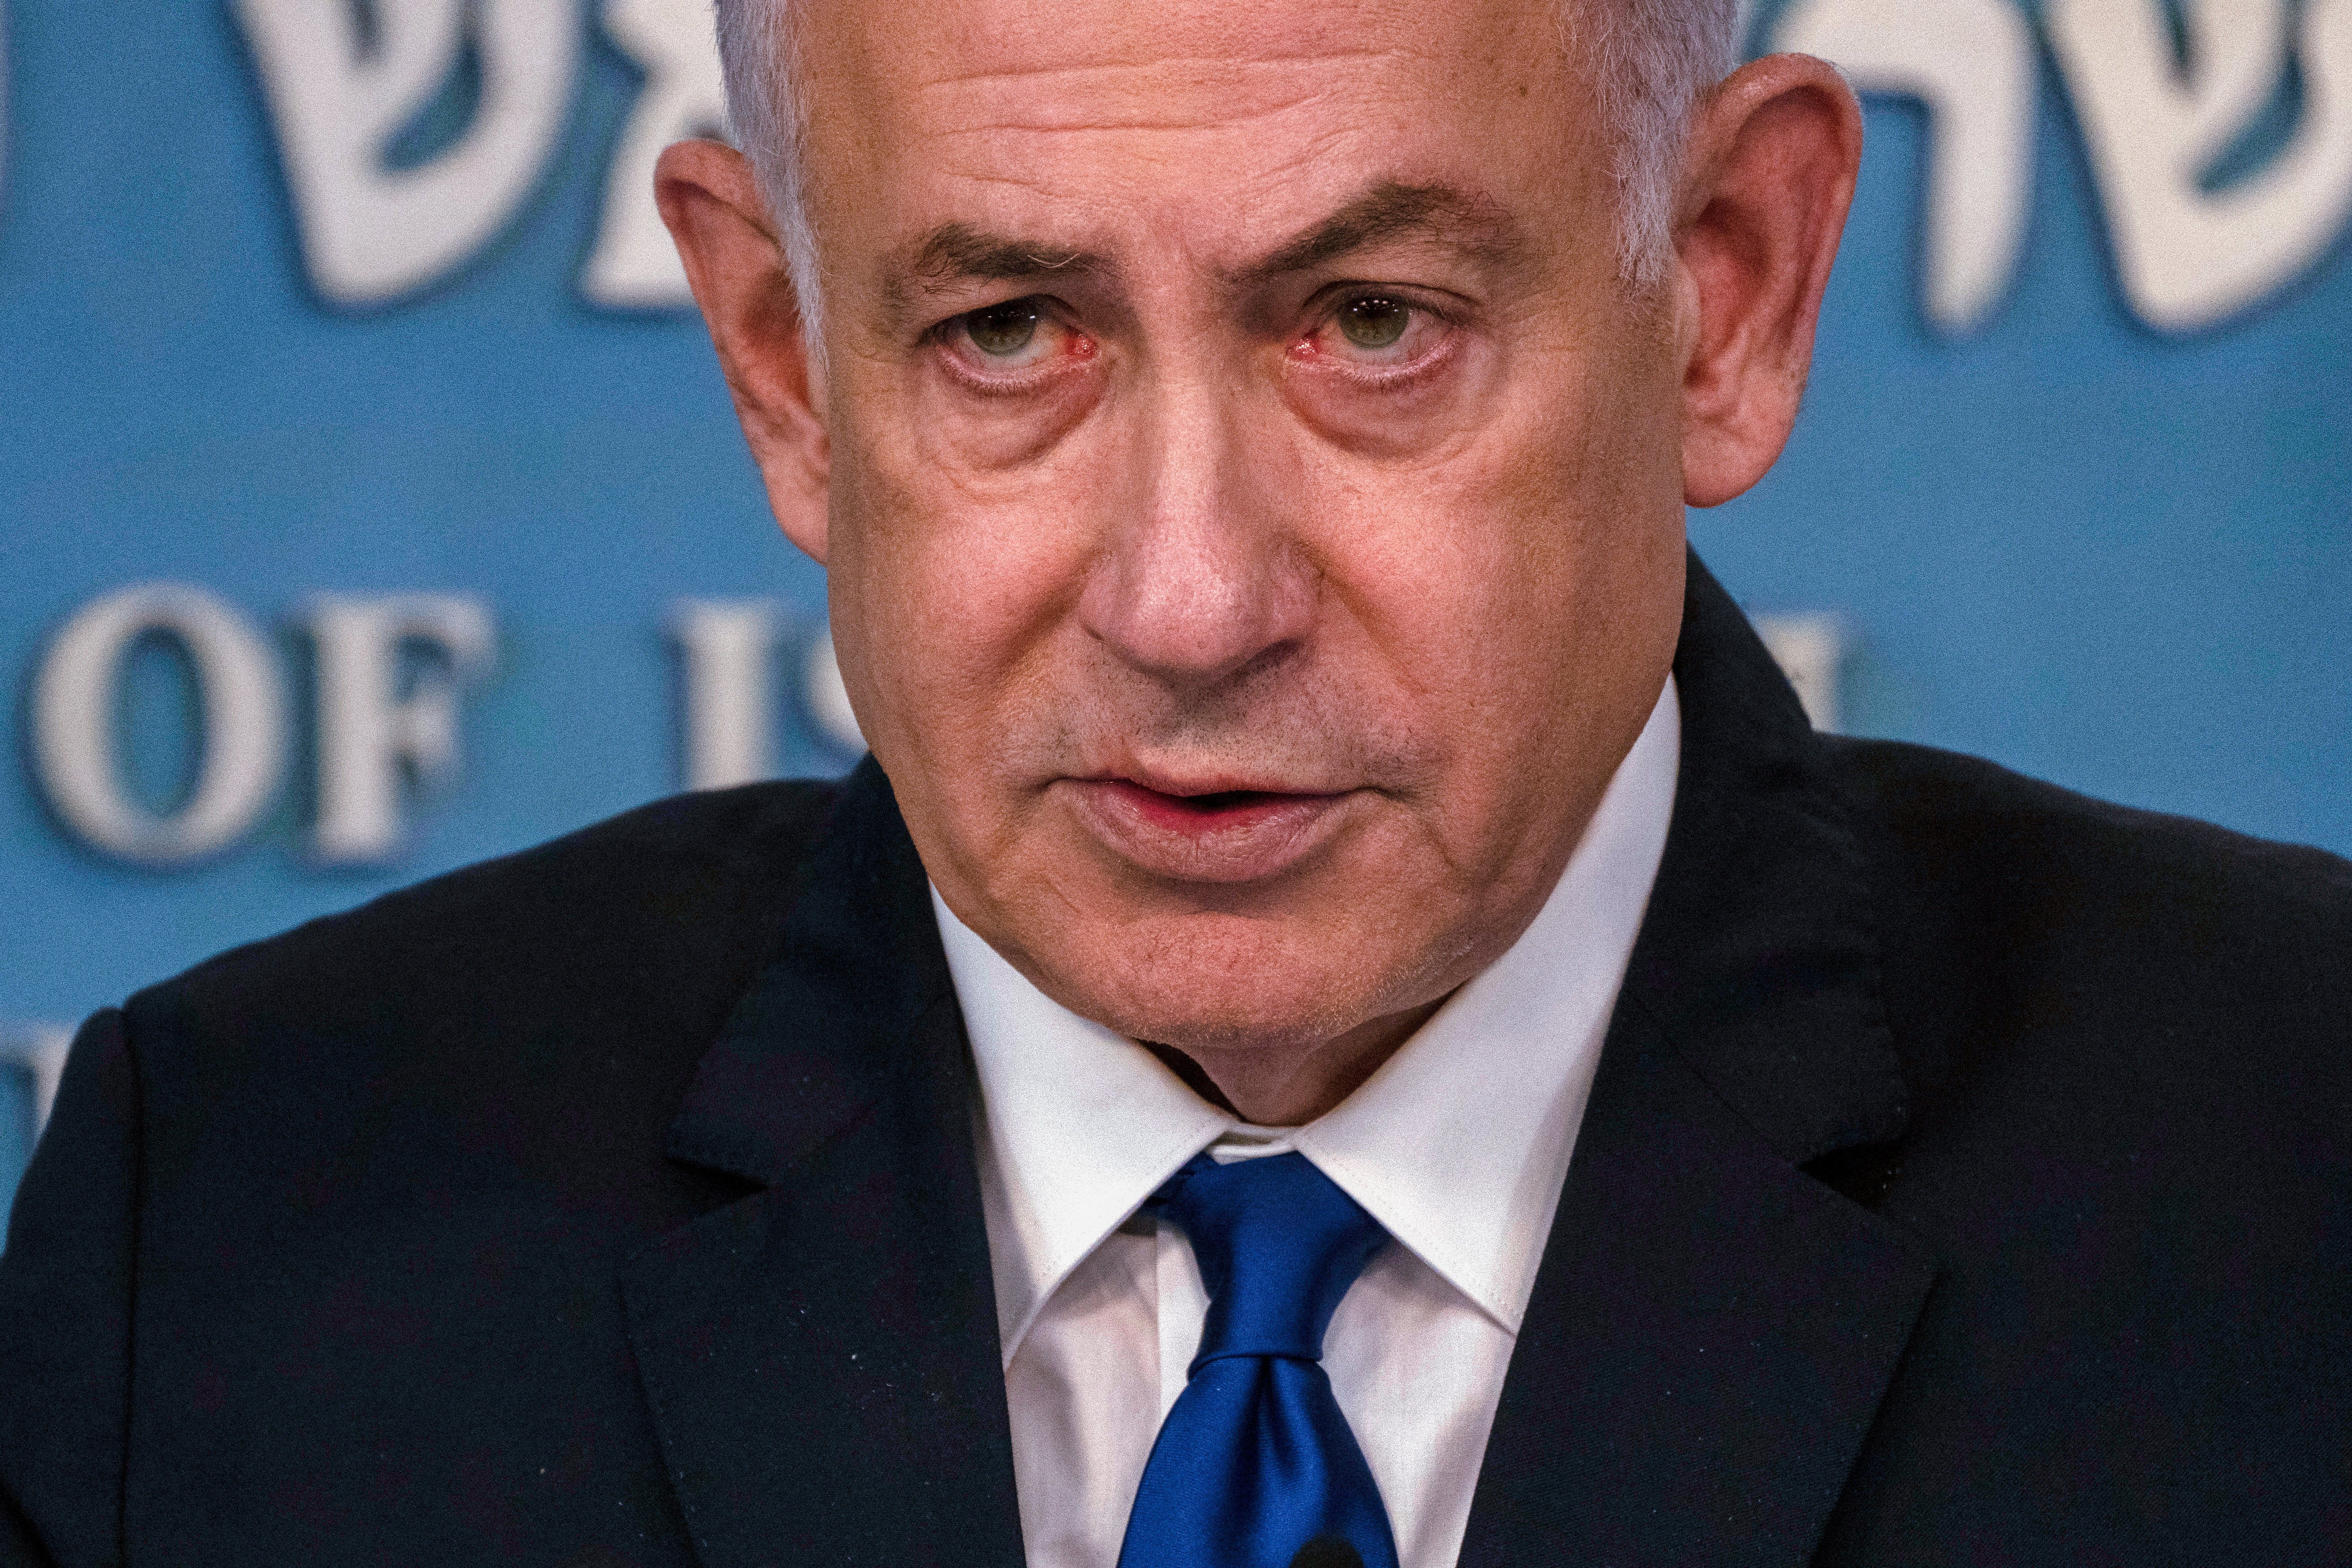 Israeli Prime Minister Benjamin Netanyahu met with Republican Senators via video call on Wednesday